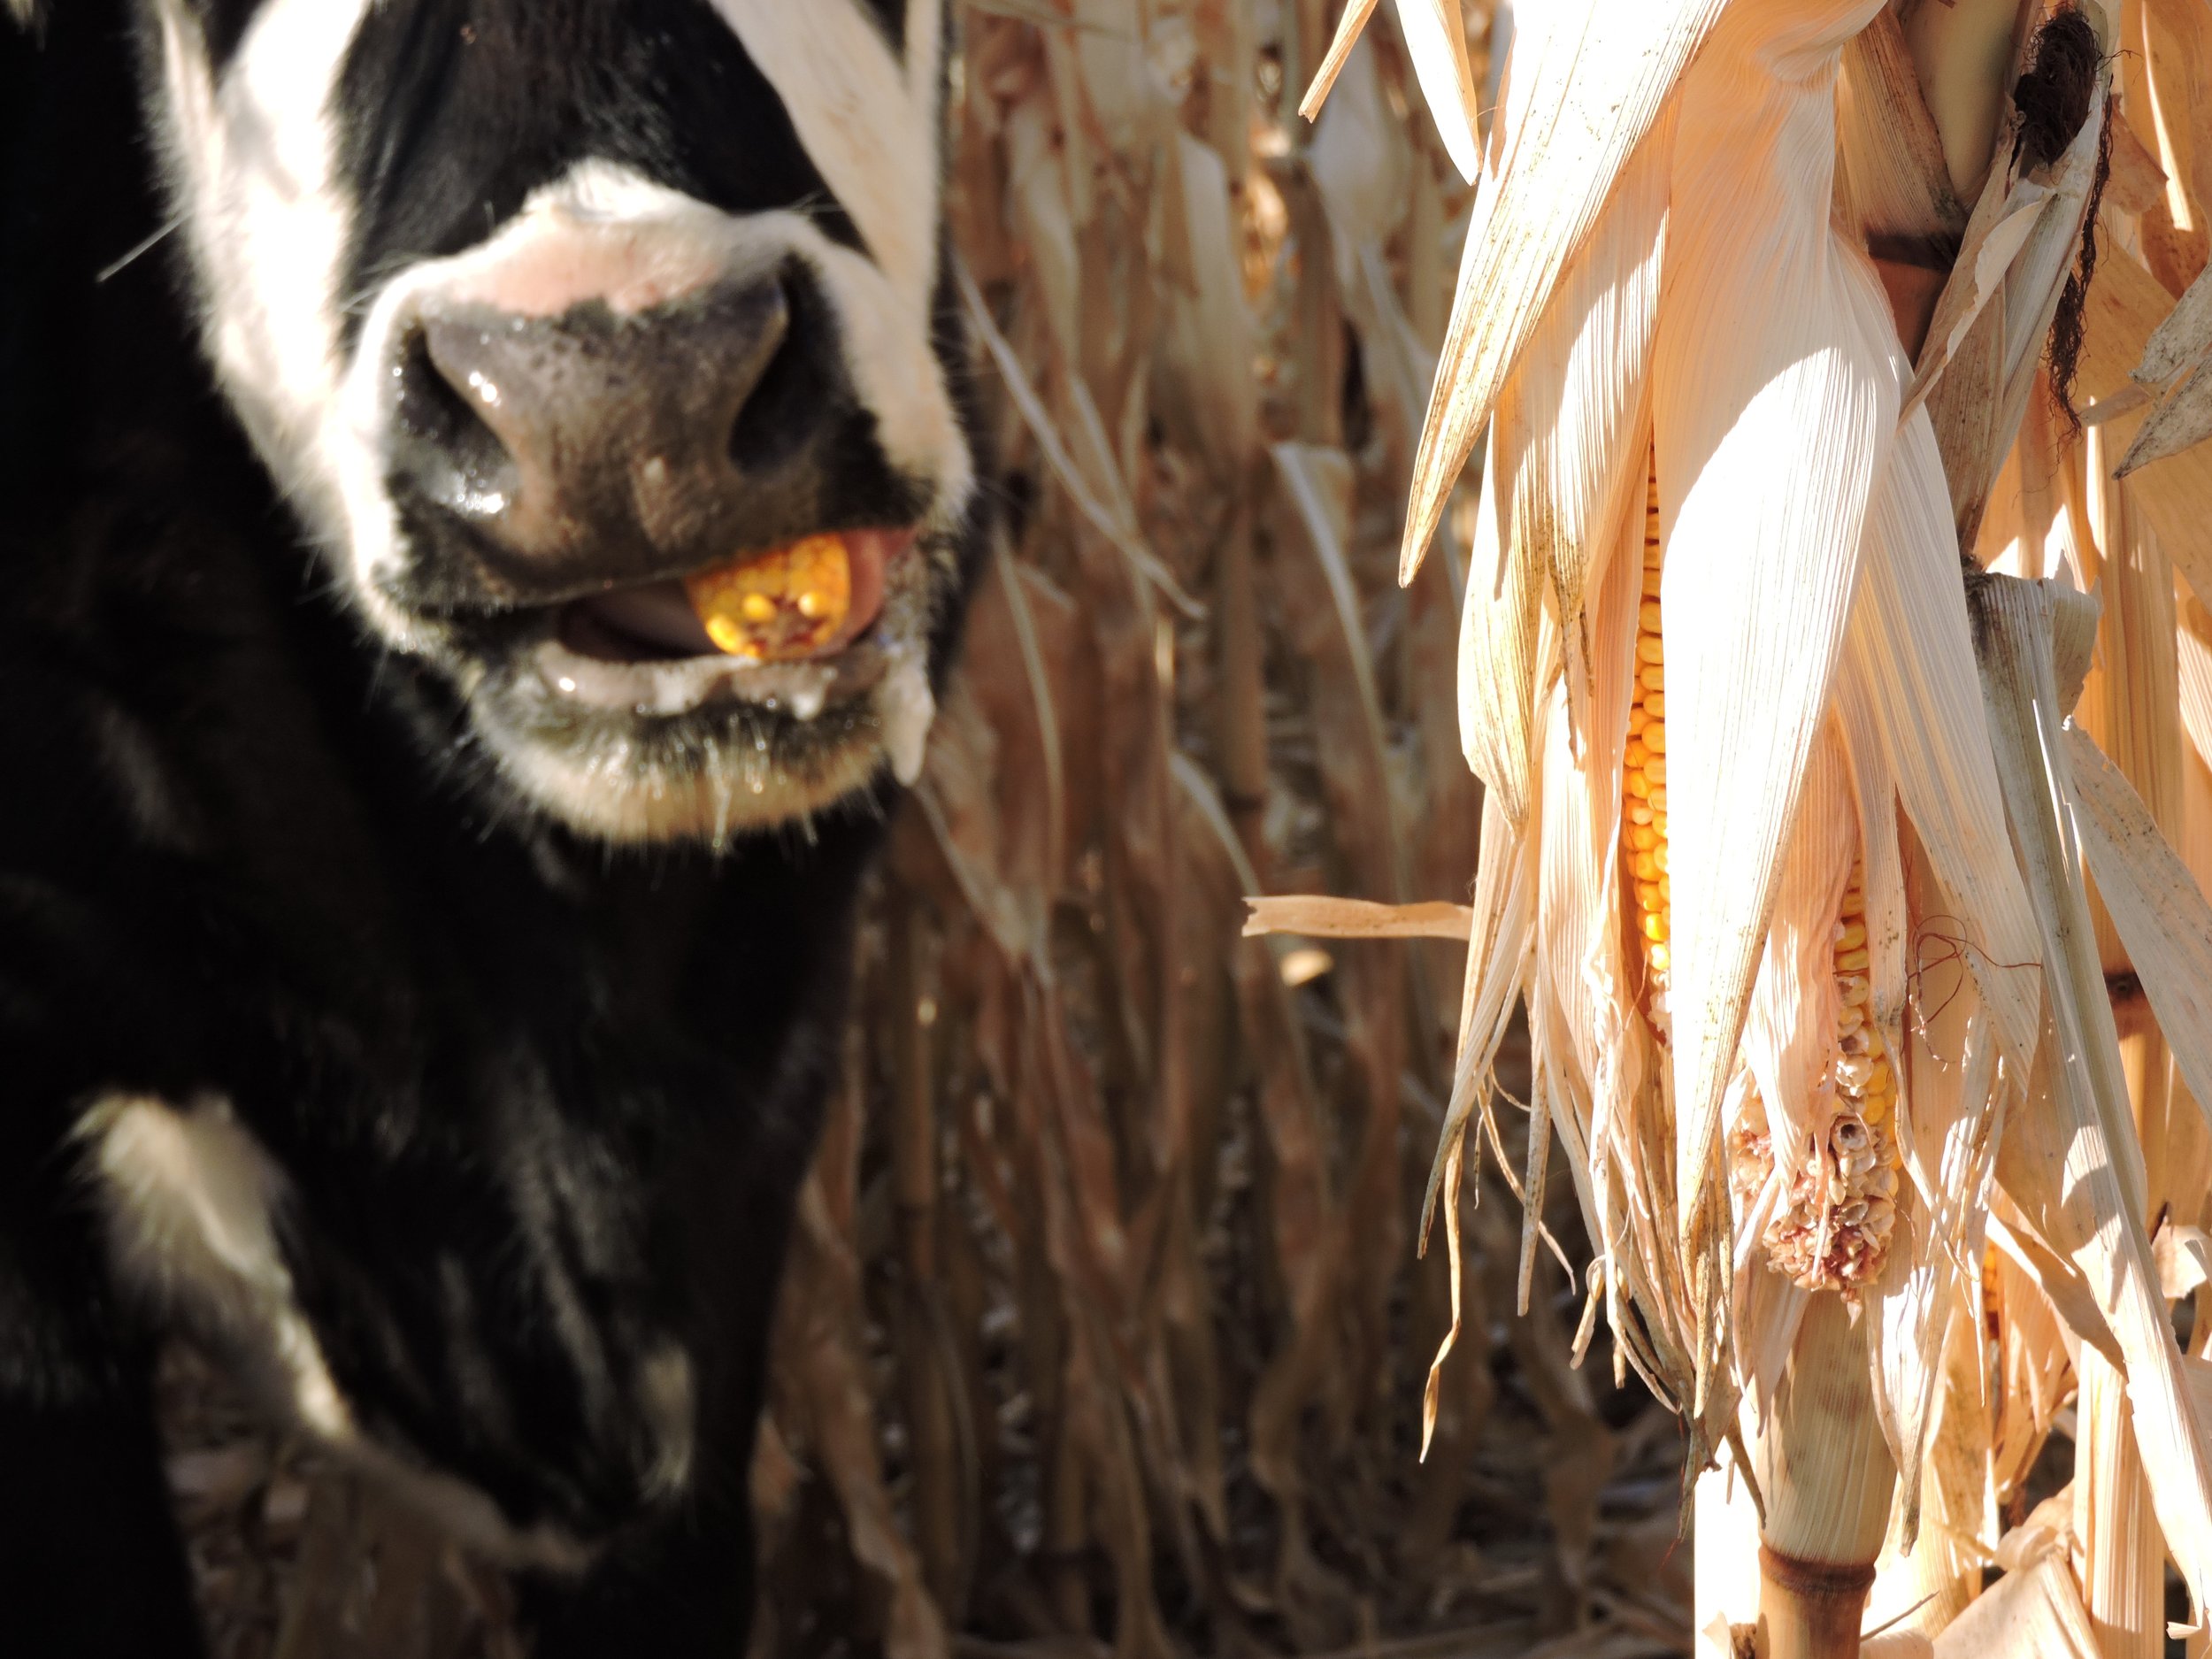 Cow eating a corn cob